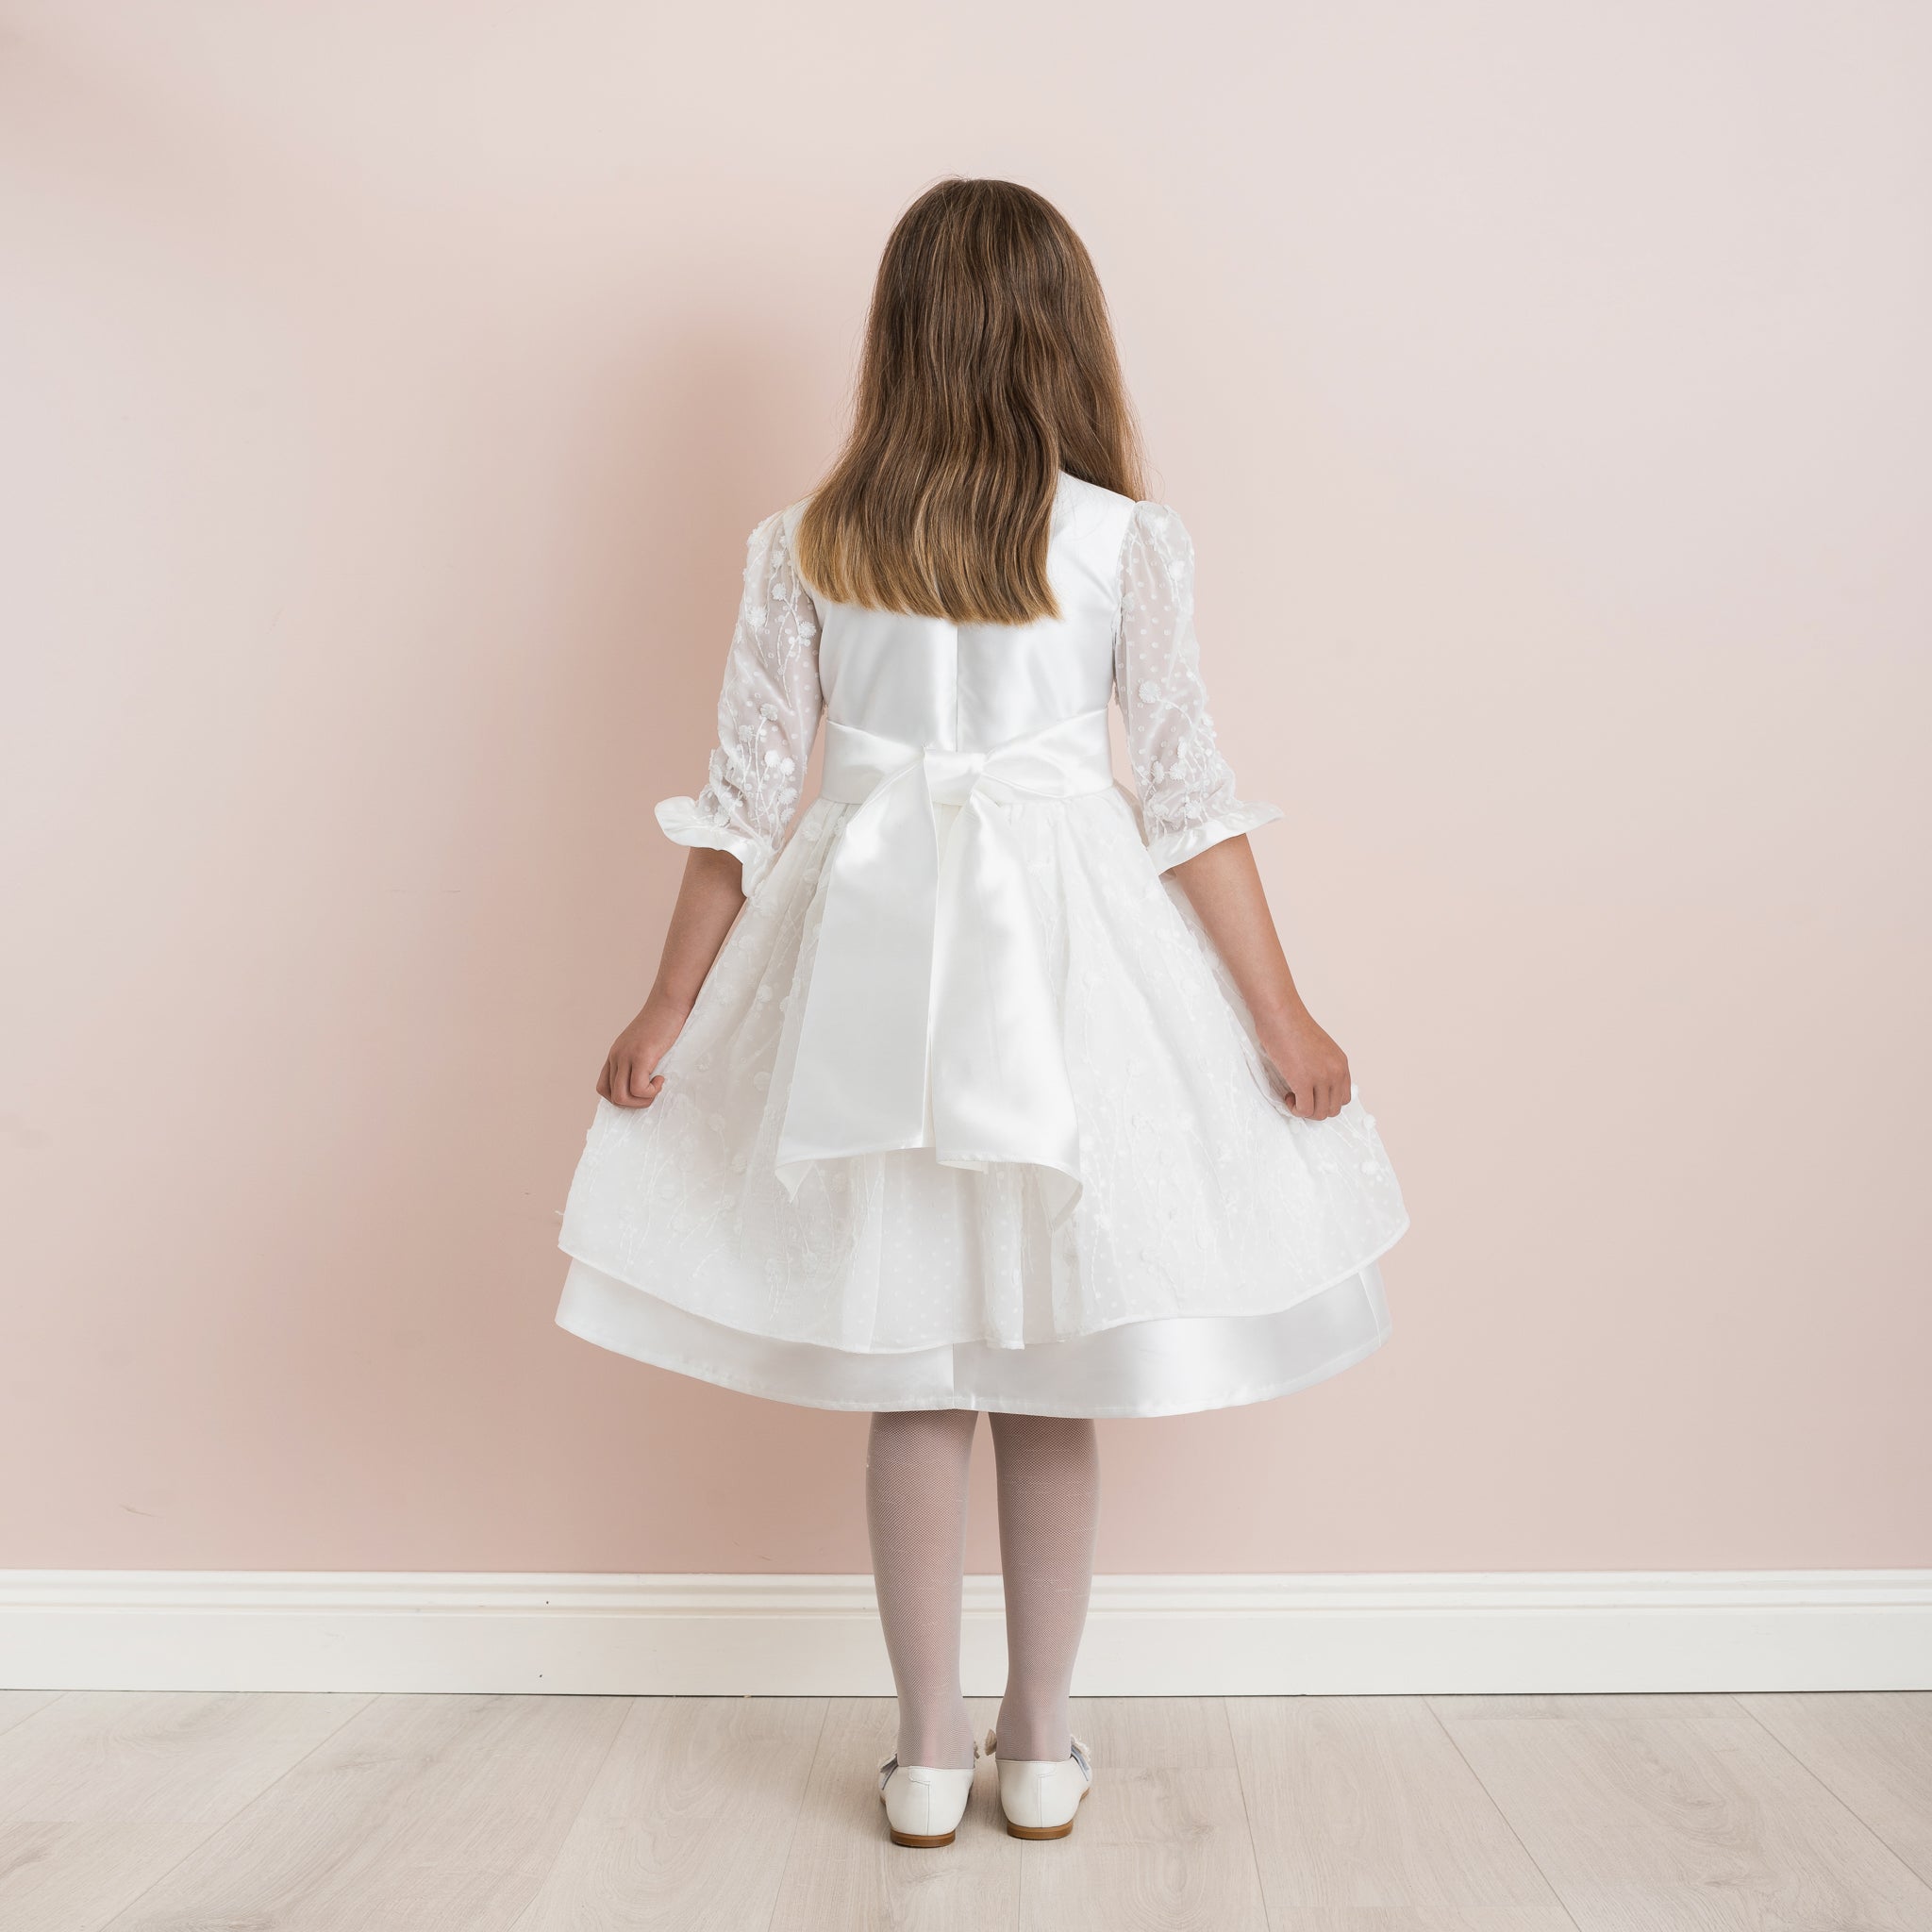 Caroline Classic Communion Dress - Alice in Wonderland Dress